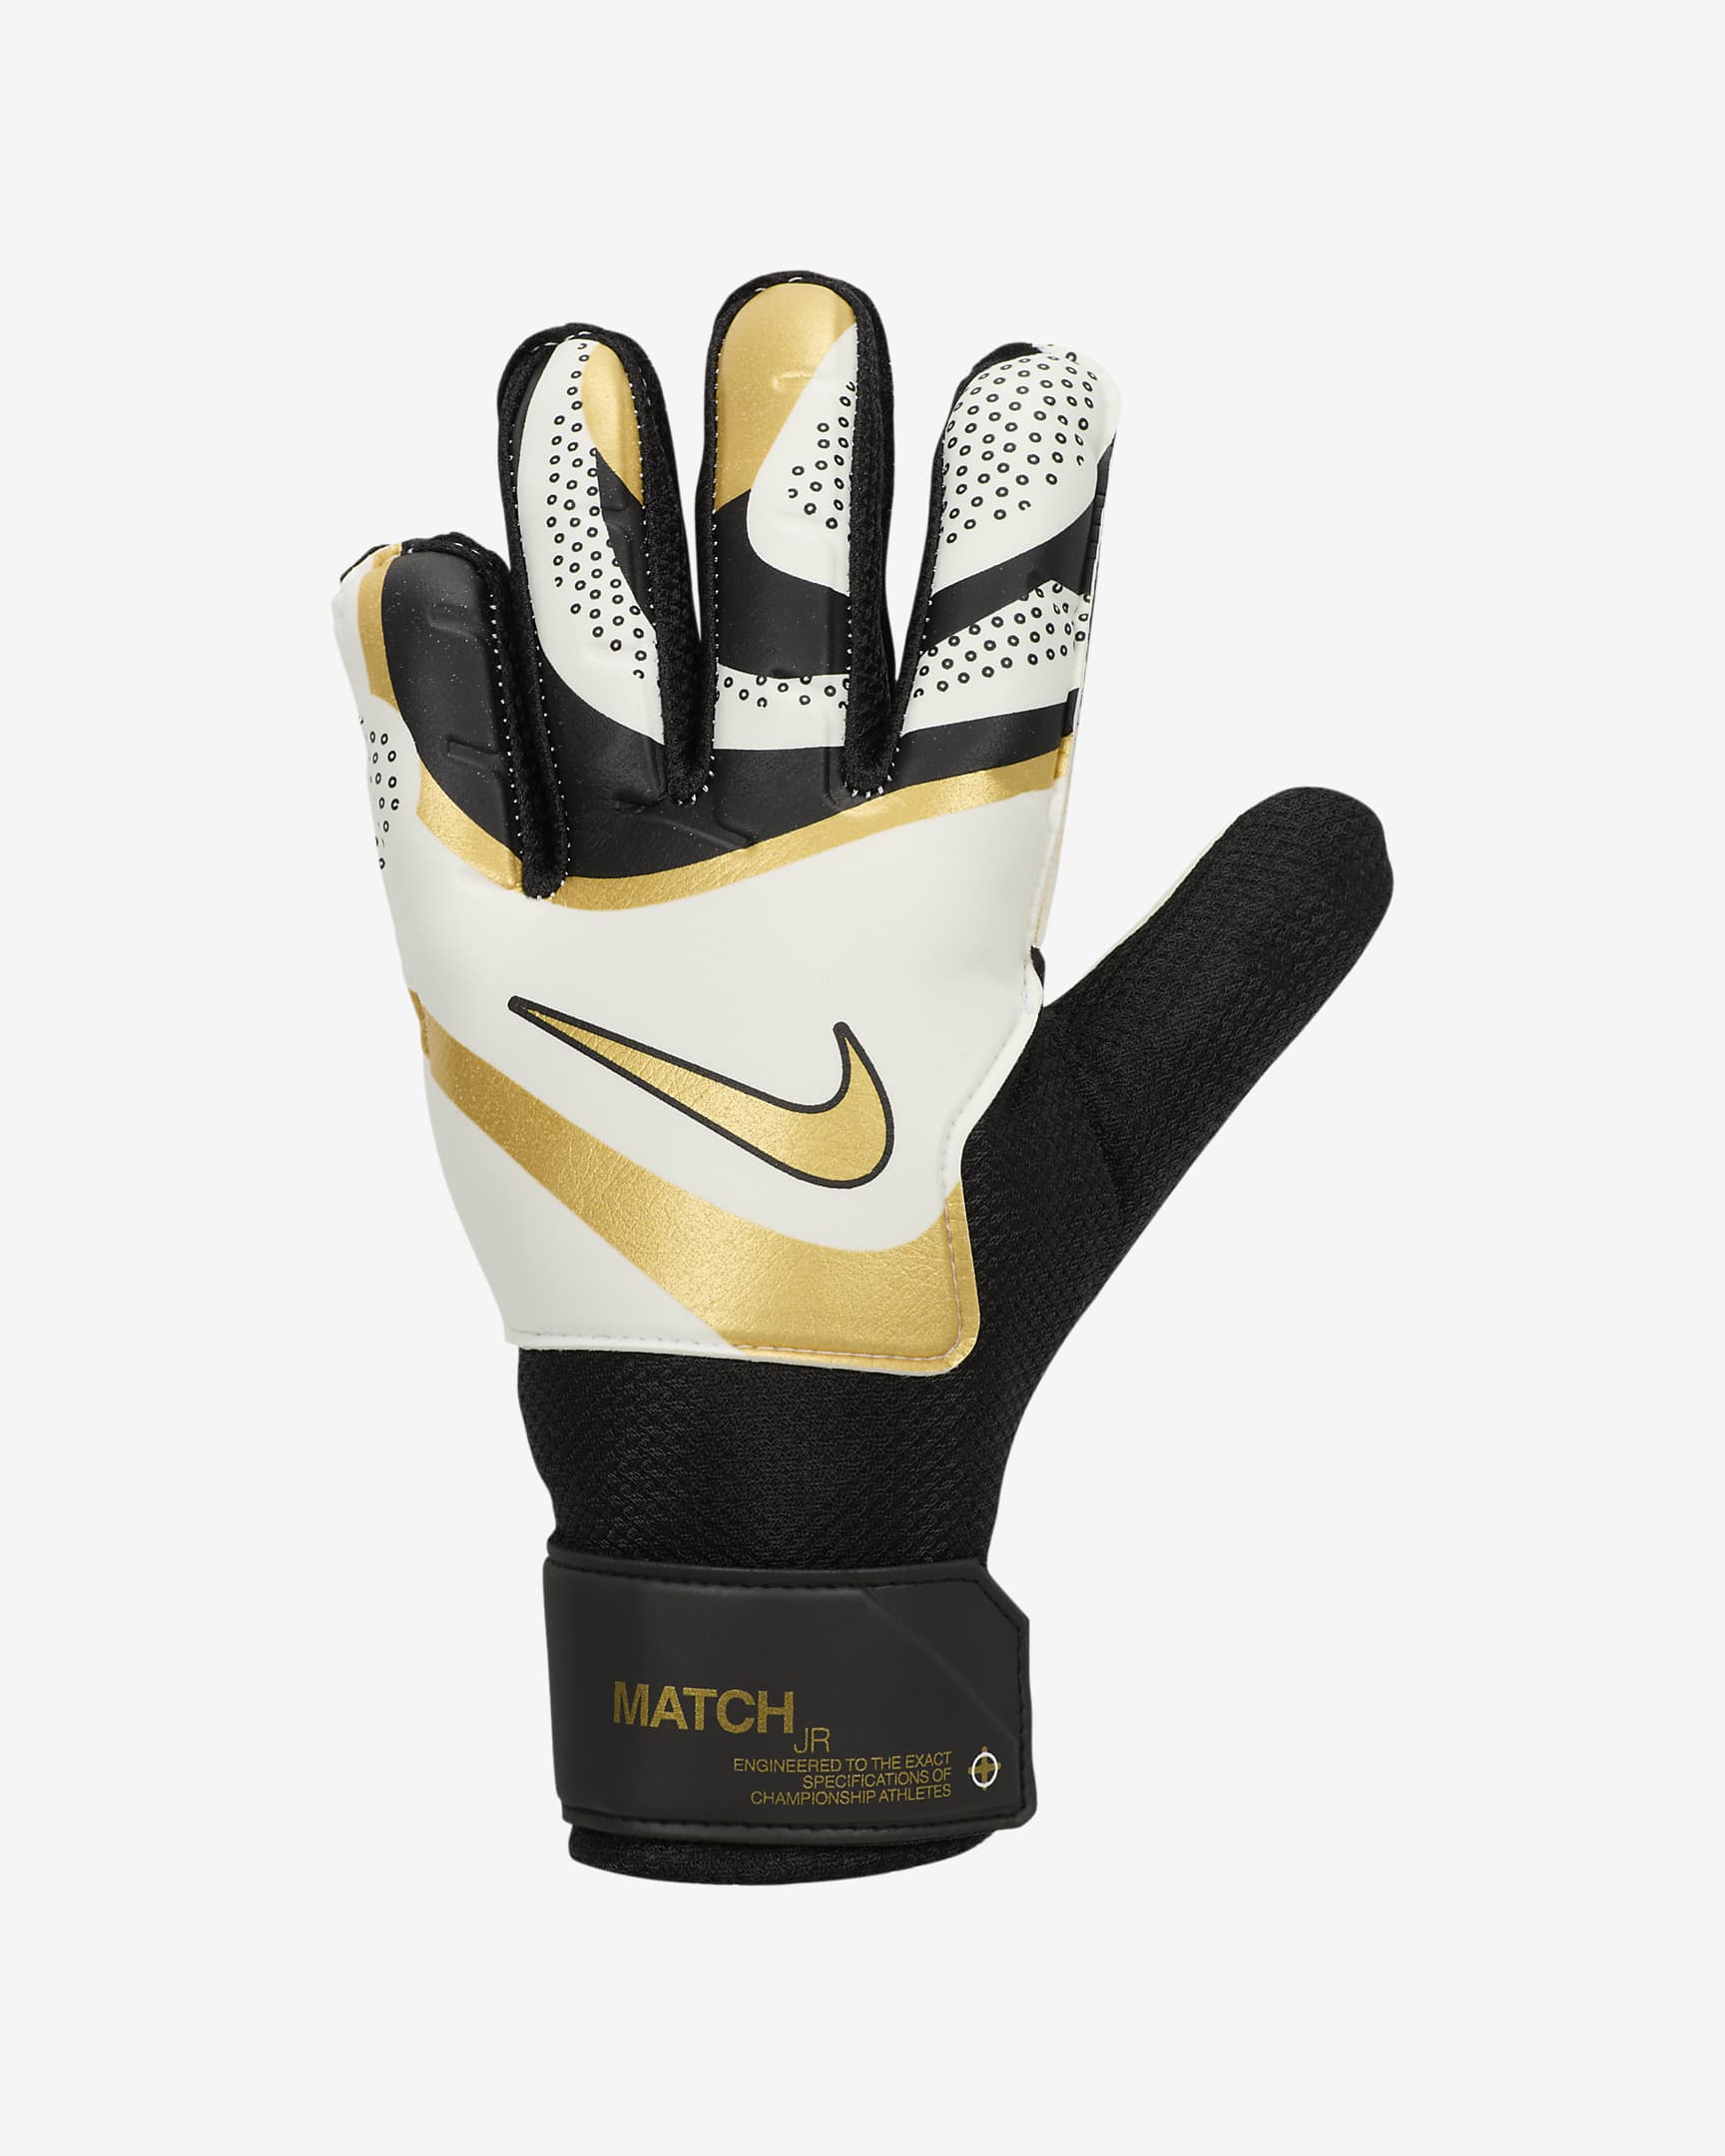 Nike Match Jr. Goalkeeper Gloves - Black/White/Metallic Gold Coin